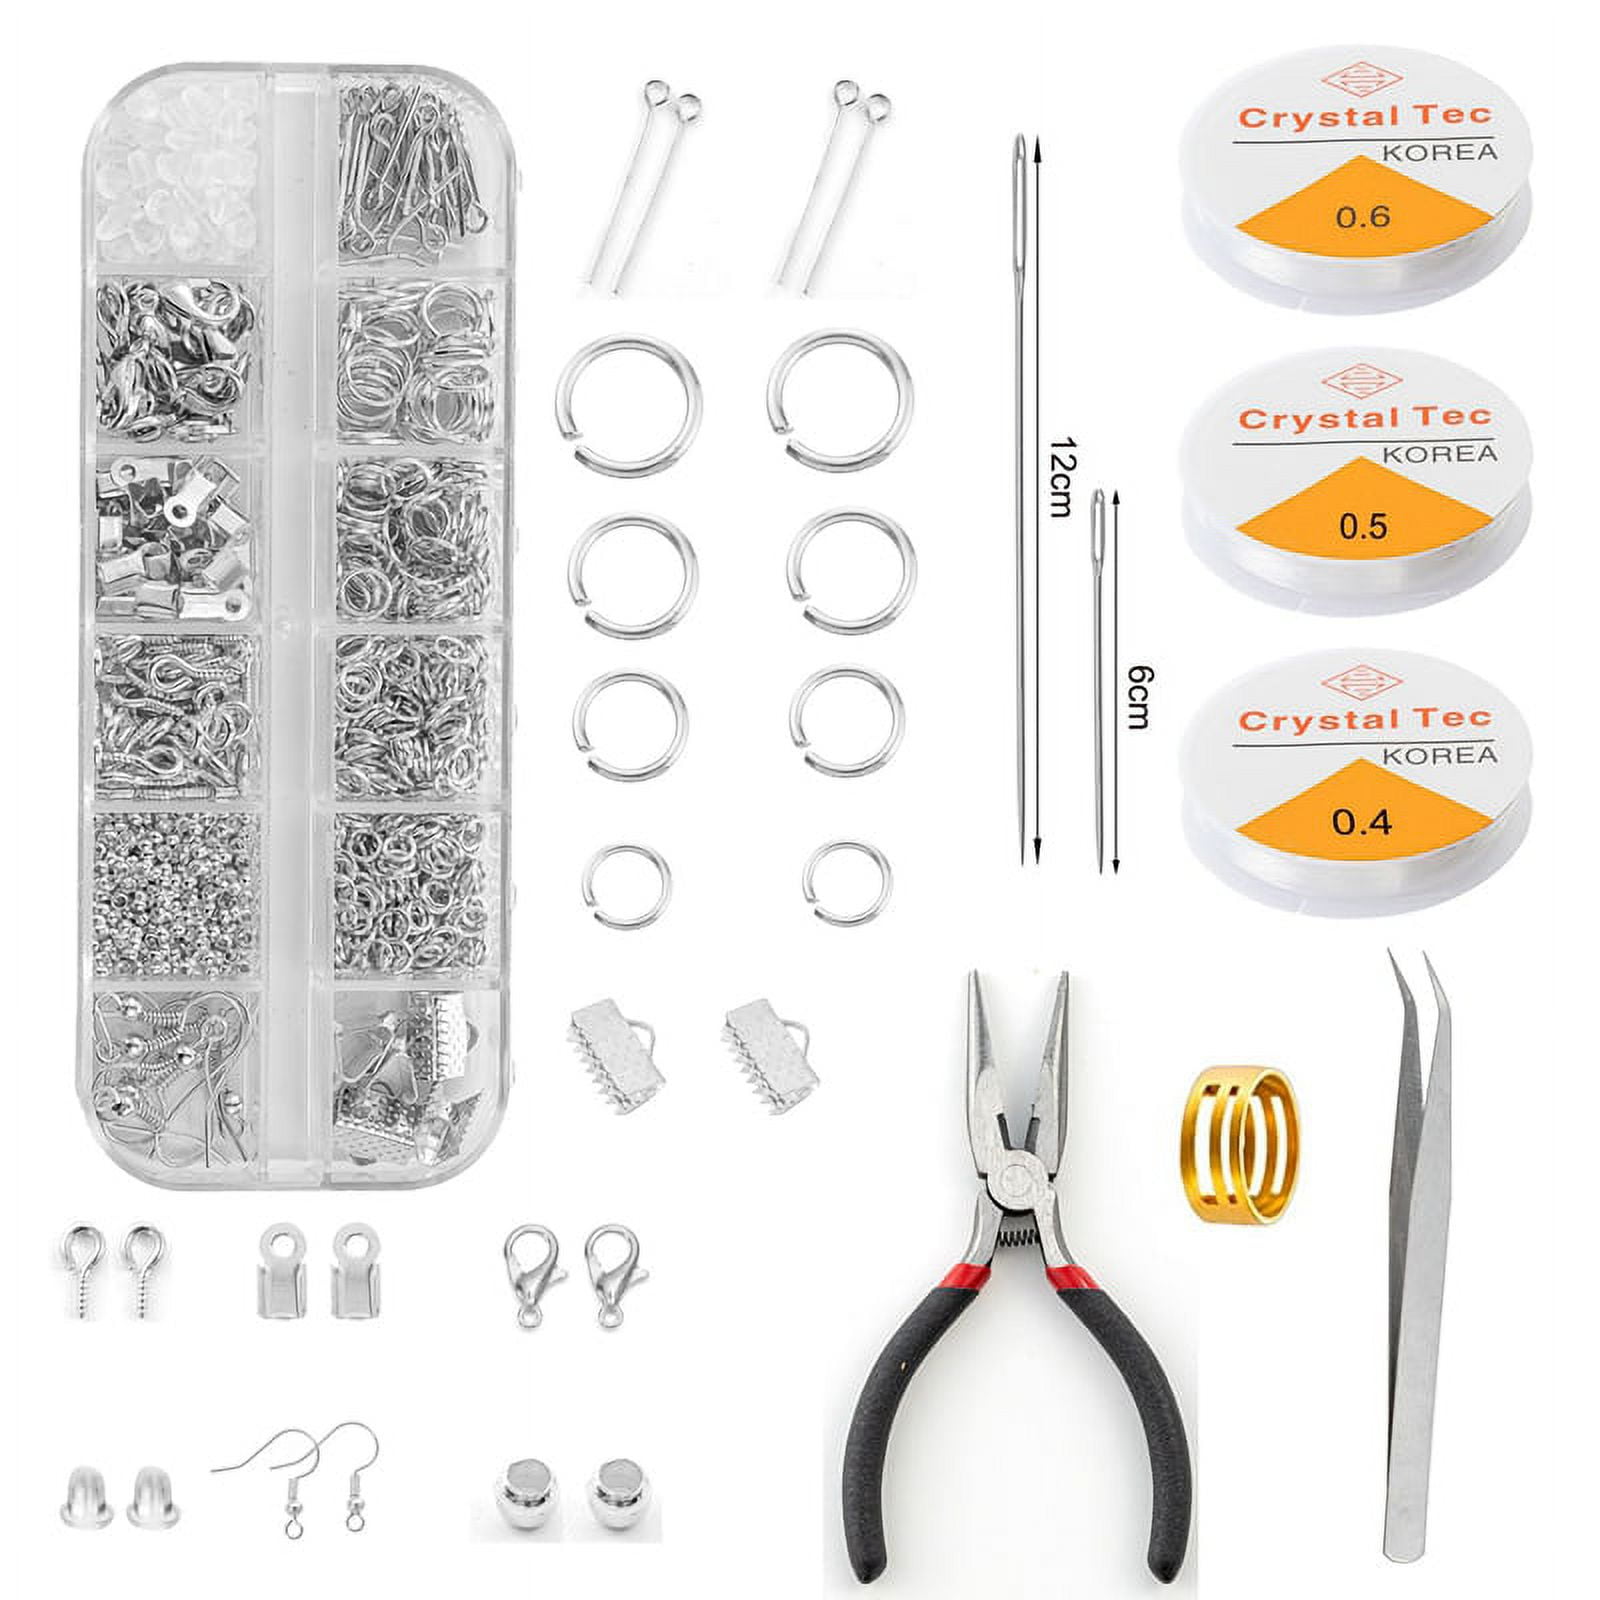 HOTOOLME Jewellery Making Tool Kits,23 Pieces Jewelry Repair Kit